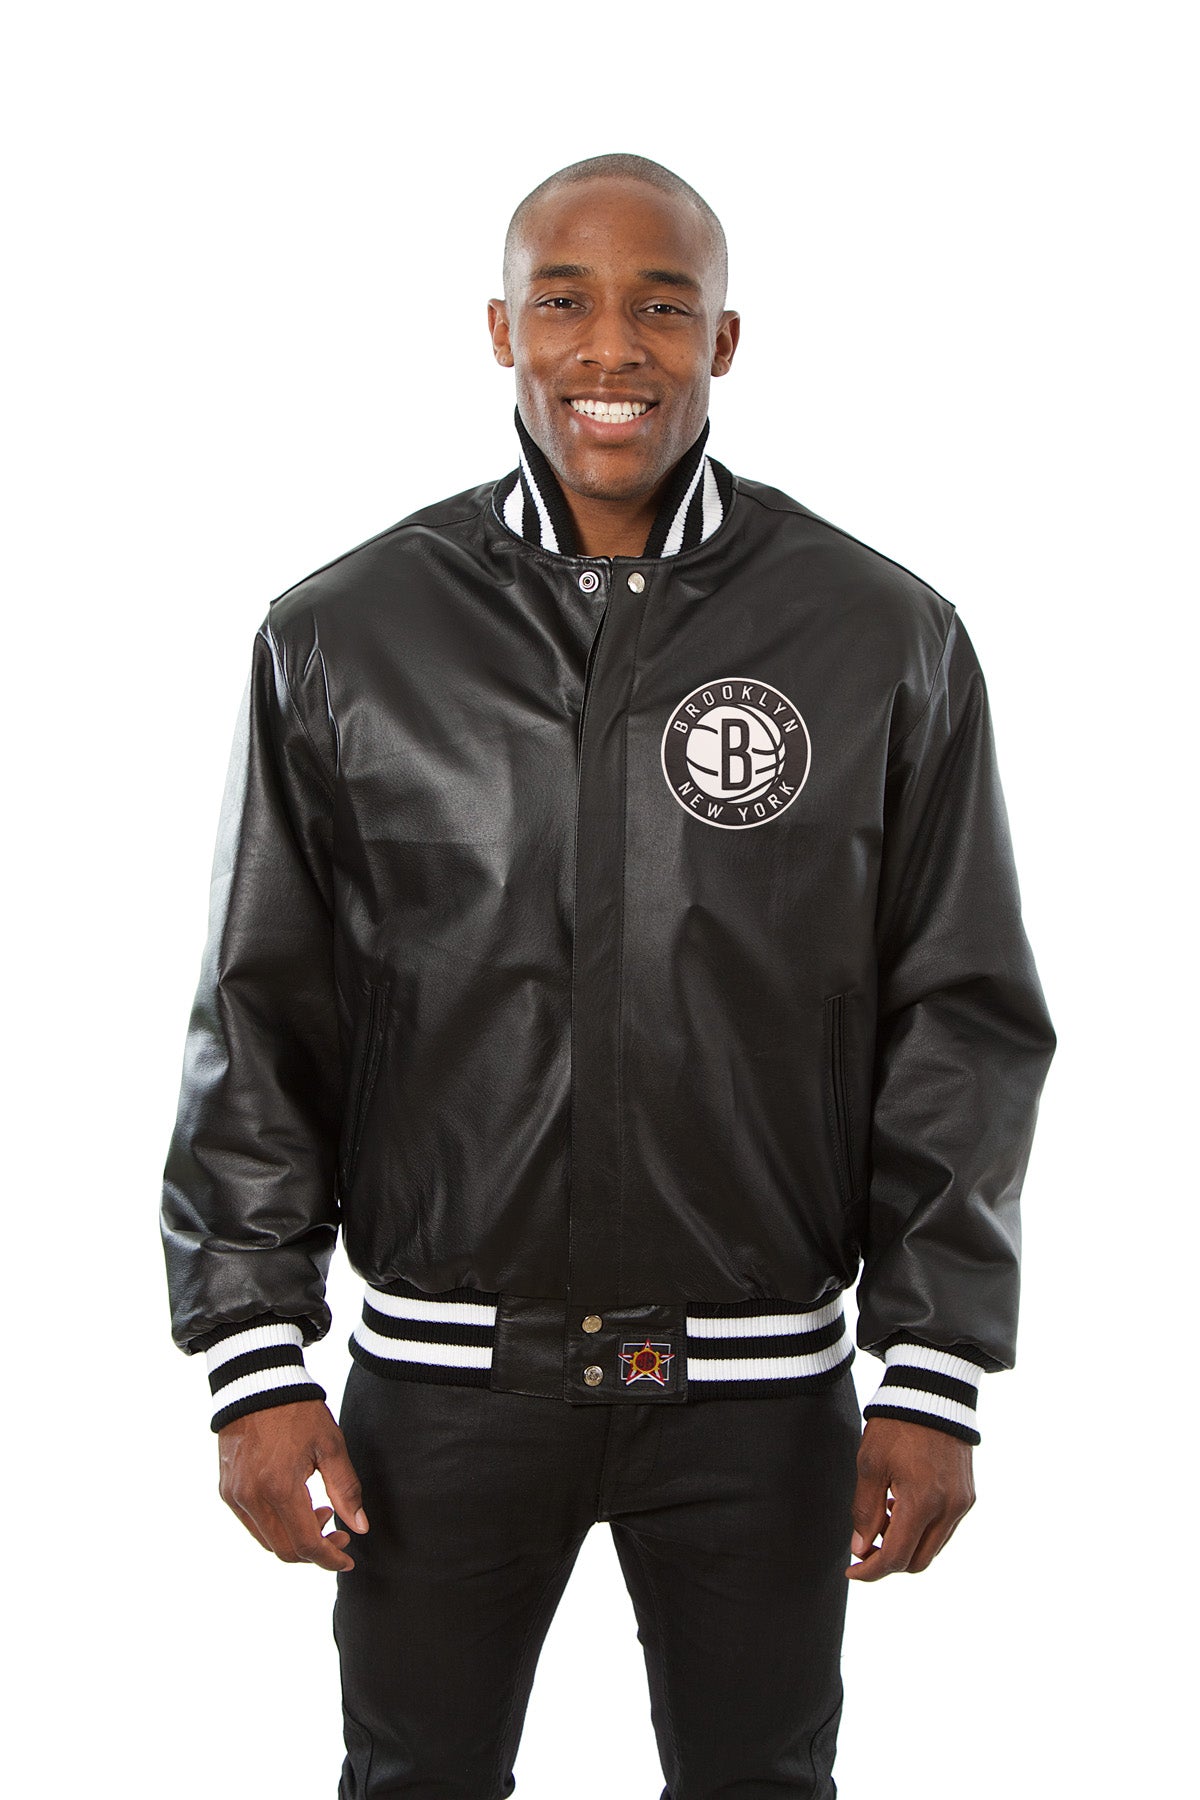 JH Design Men's Brooklyn Nets Black Bomber Jacket, XXL